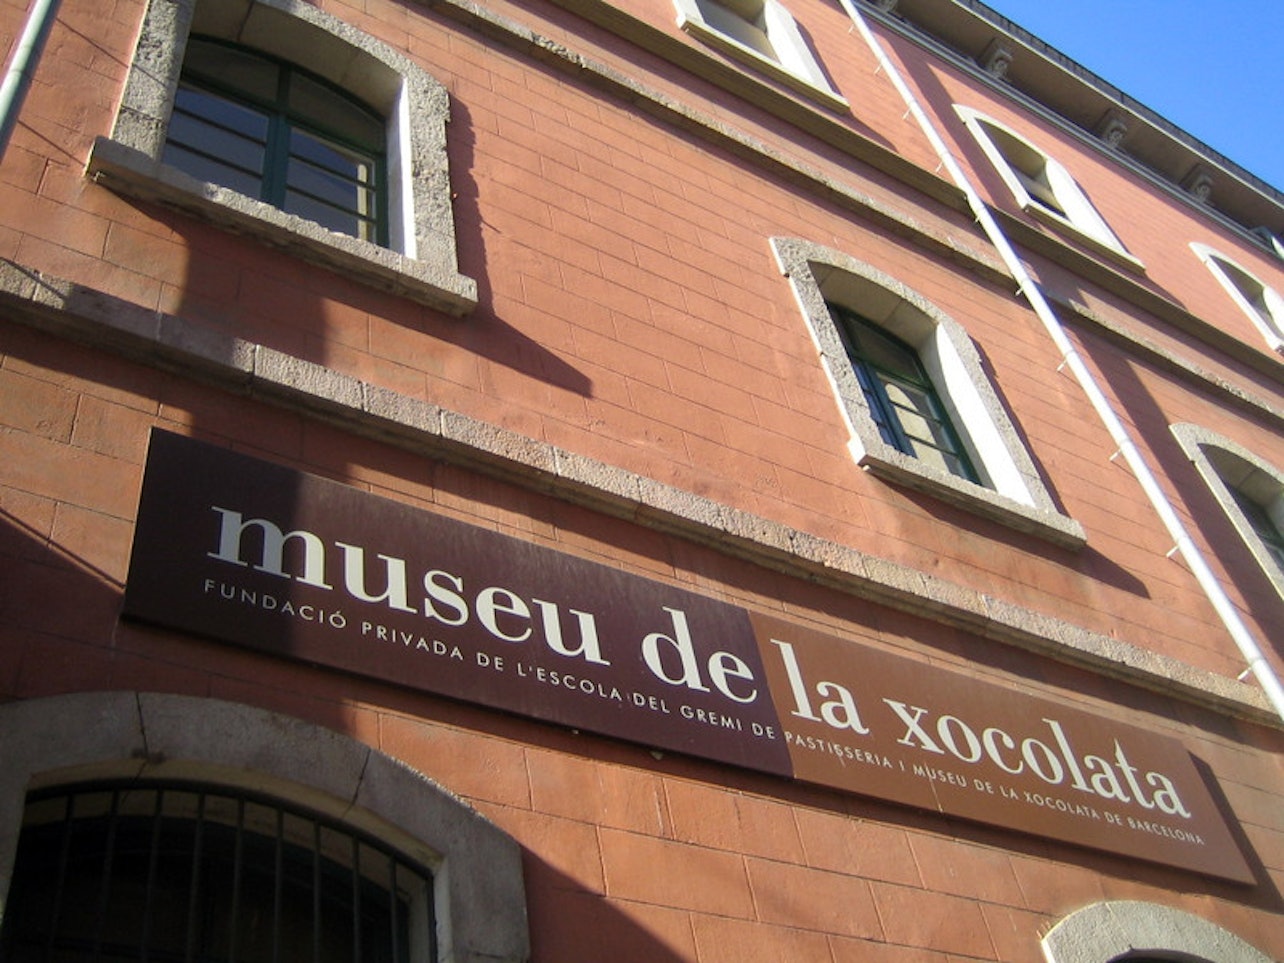 Chocolate Museum (Museu de la Xocolata de Barcelona) - Accommodations in Barcelona